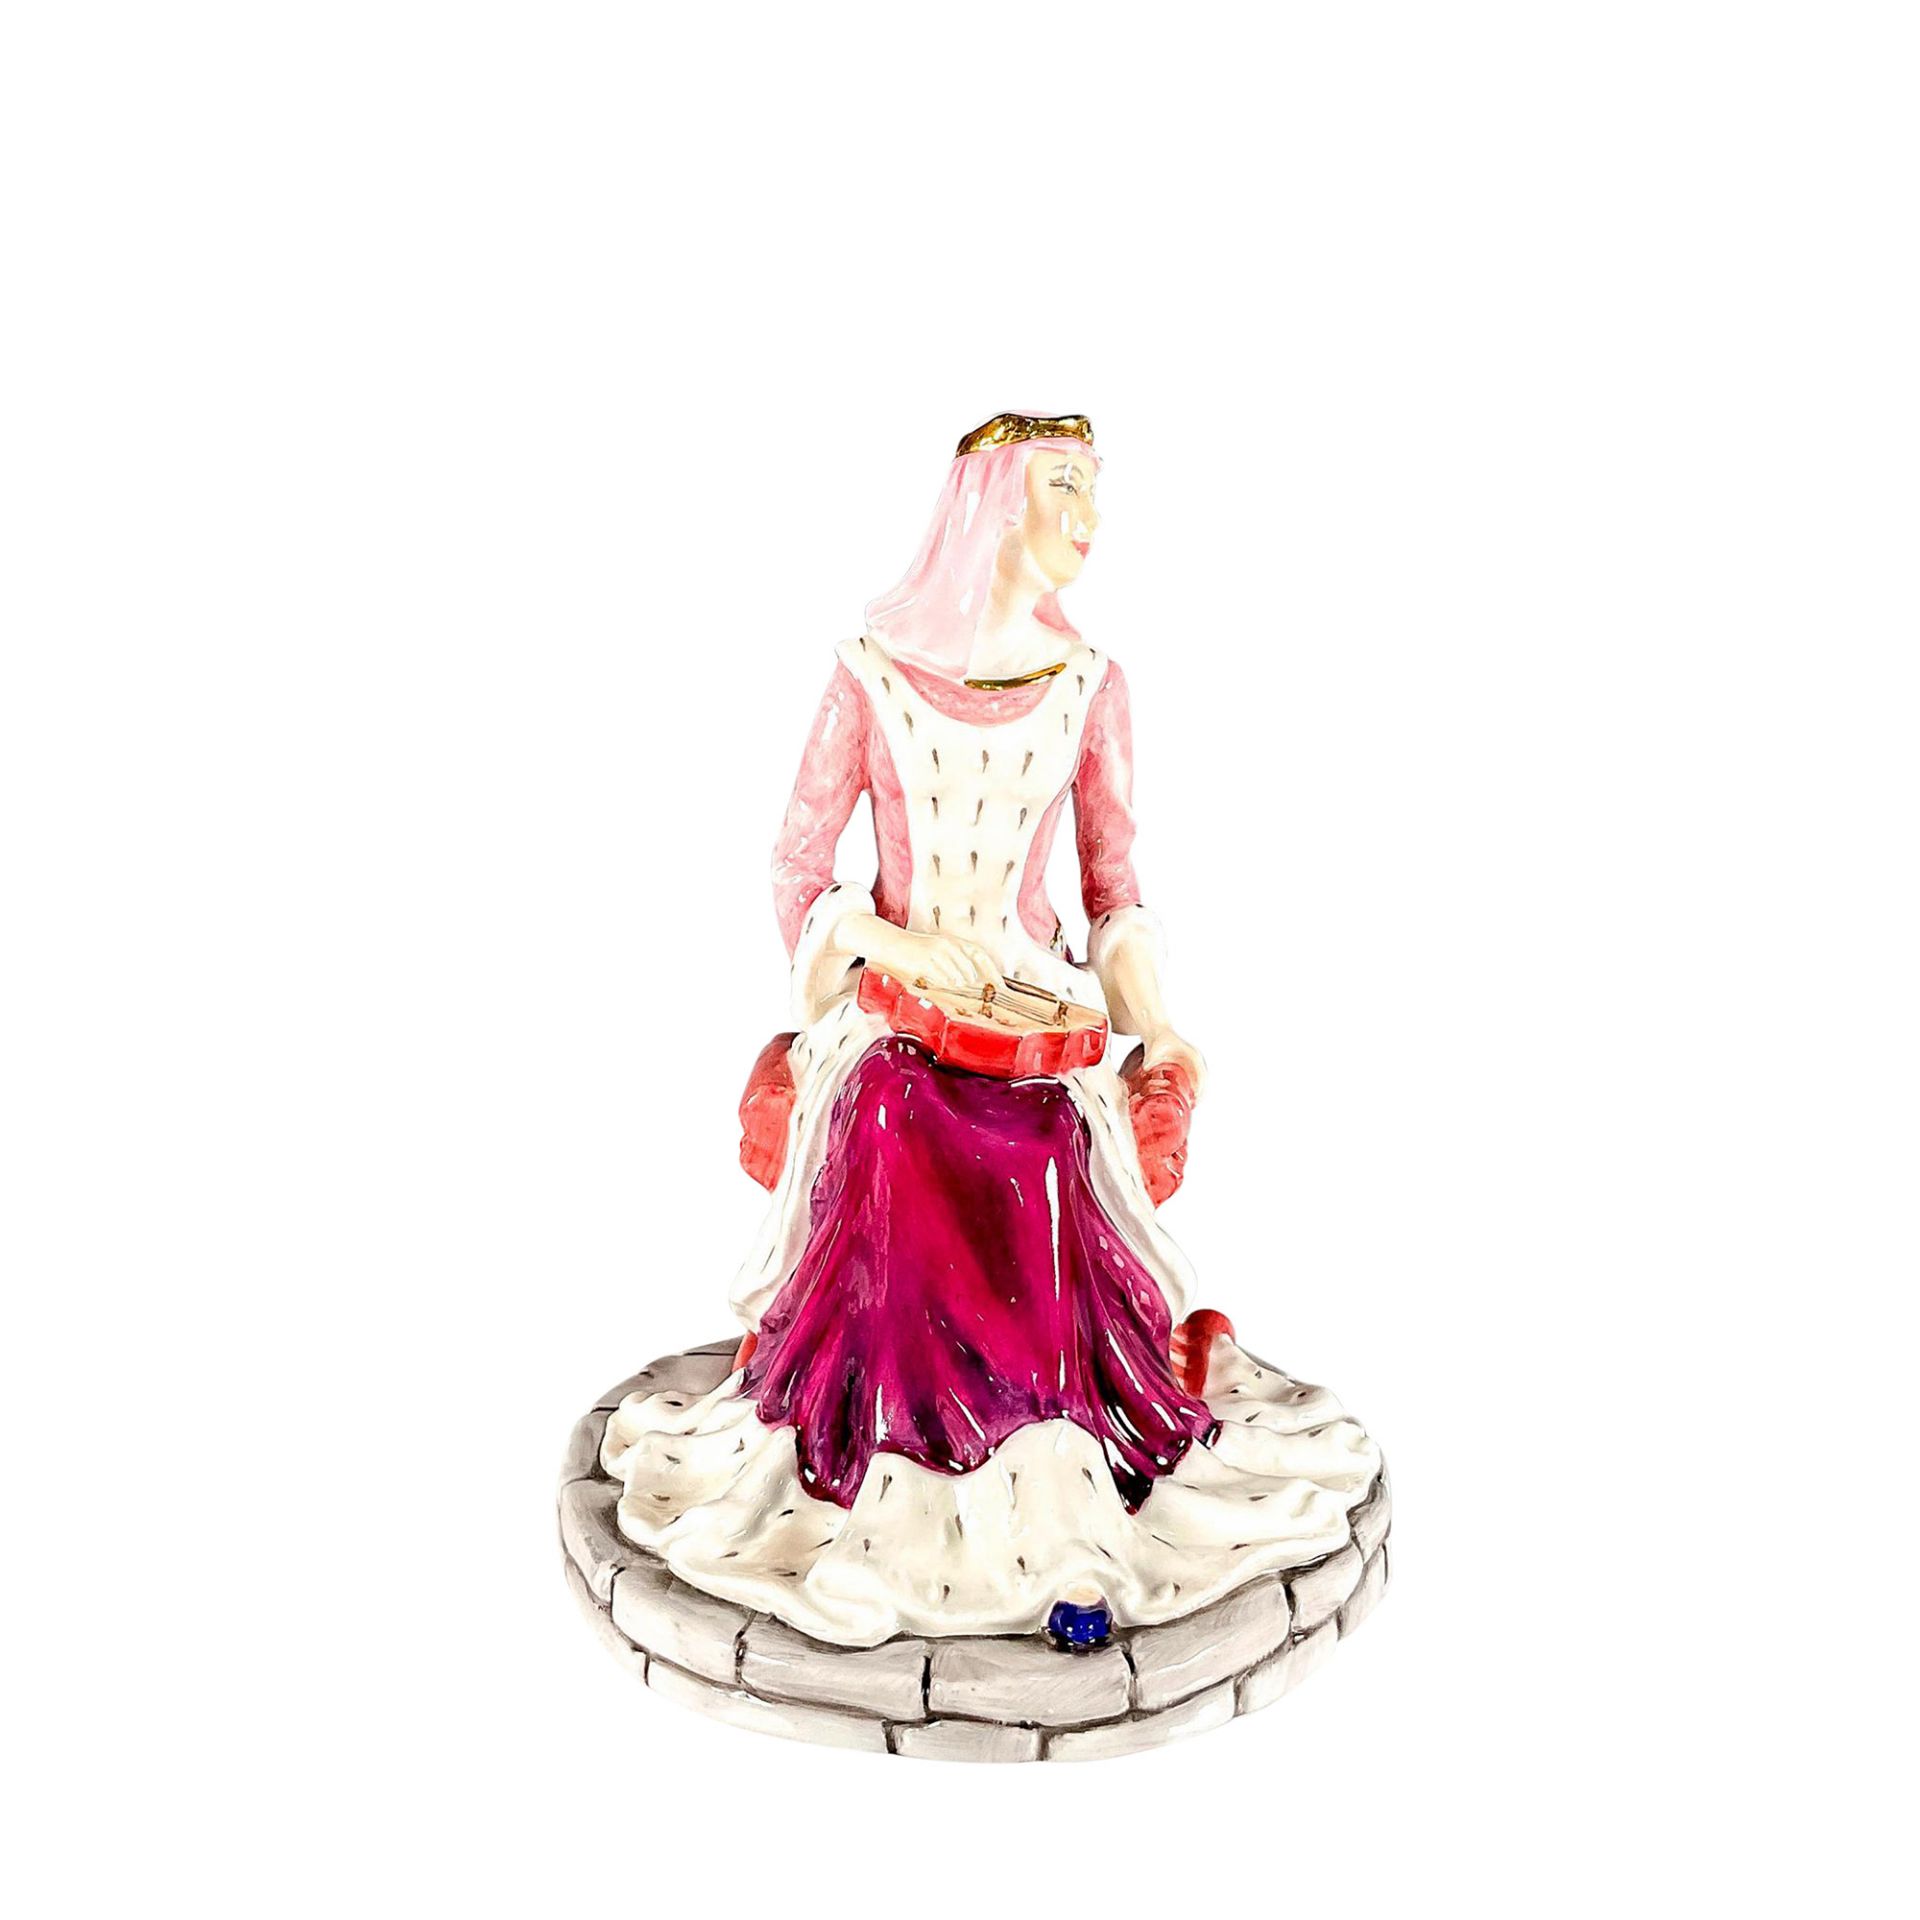 Margaret of Anjou HN4073 - Royal Doulton Figurine